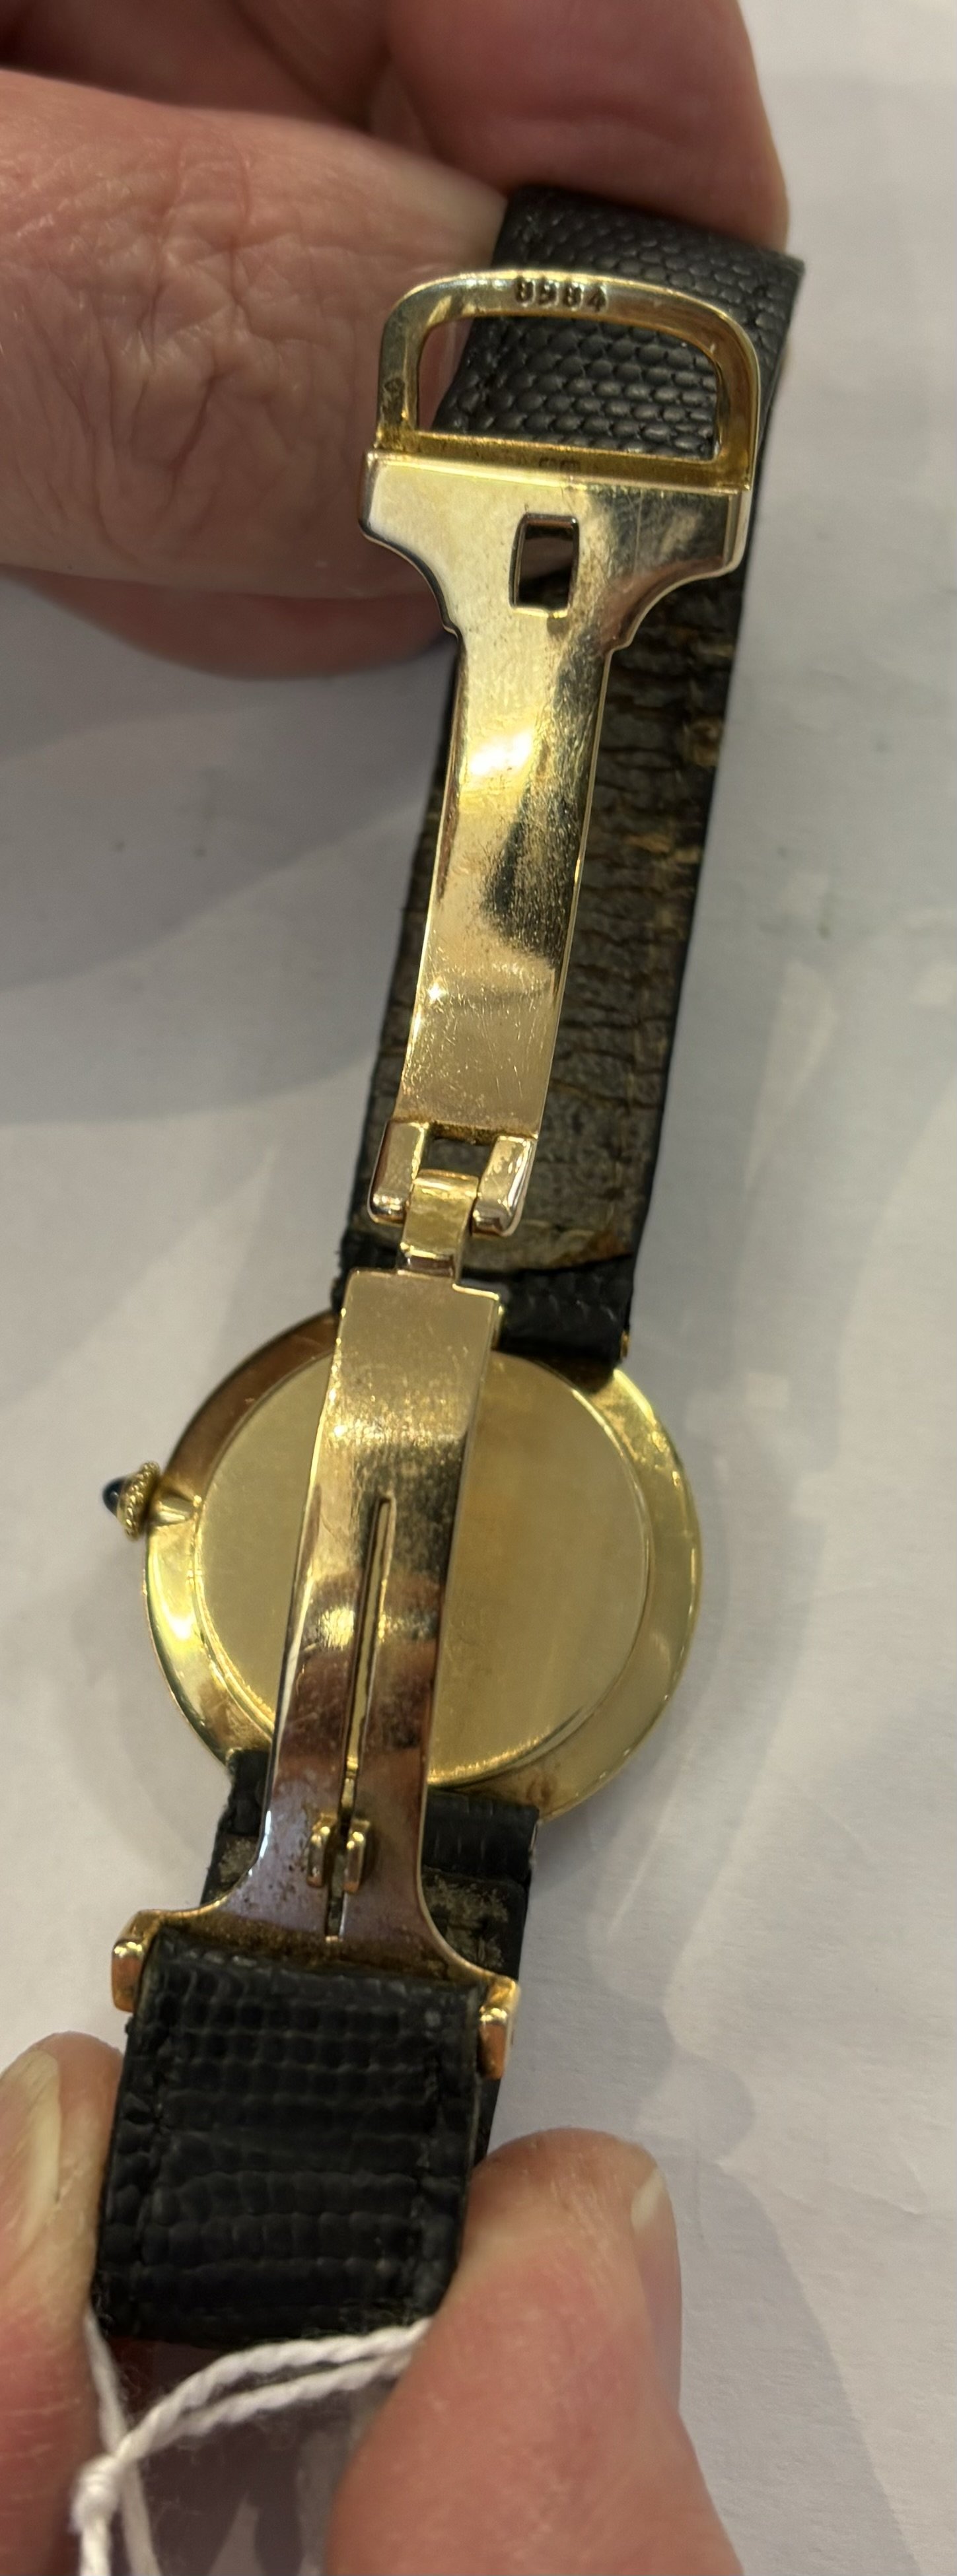 A CARTIER RONDE 18CT GOLD CIRCULAR GENTLEMAN'S WRISTWATCH - Image 4 of 14